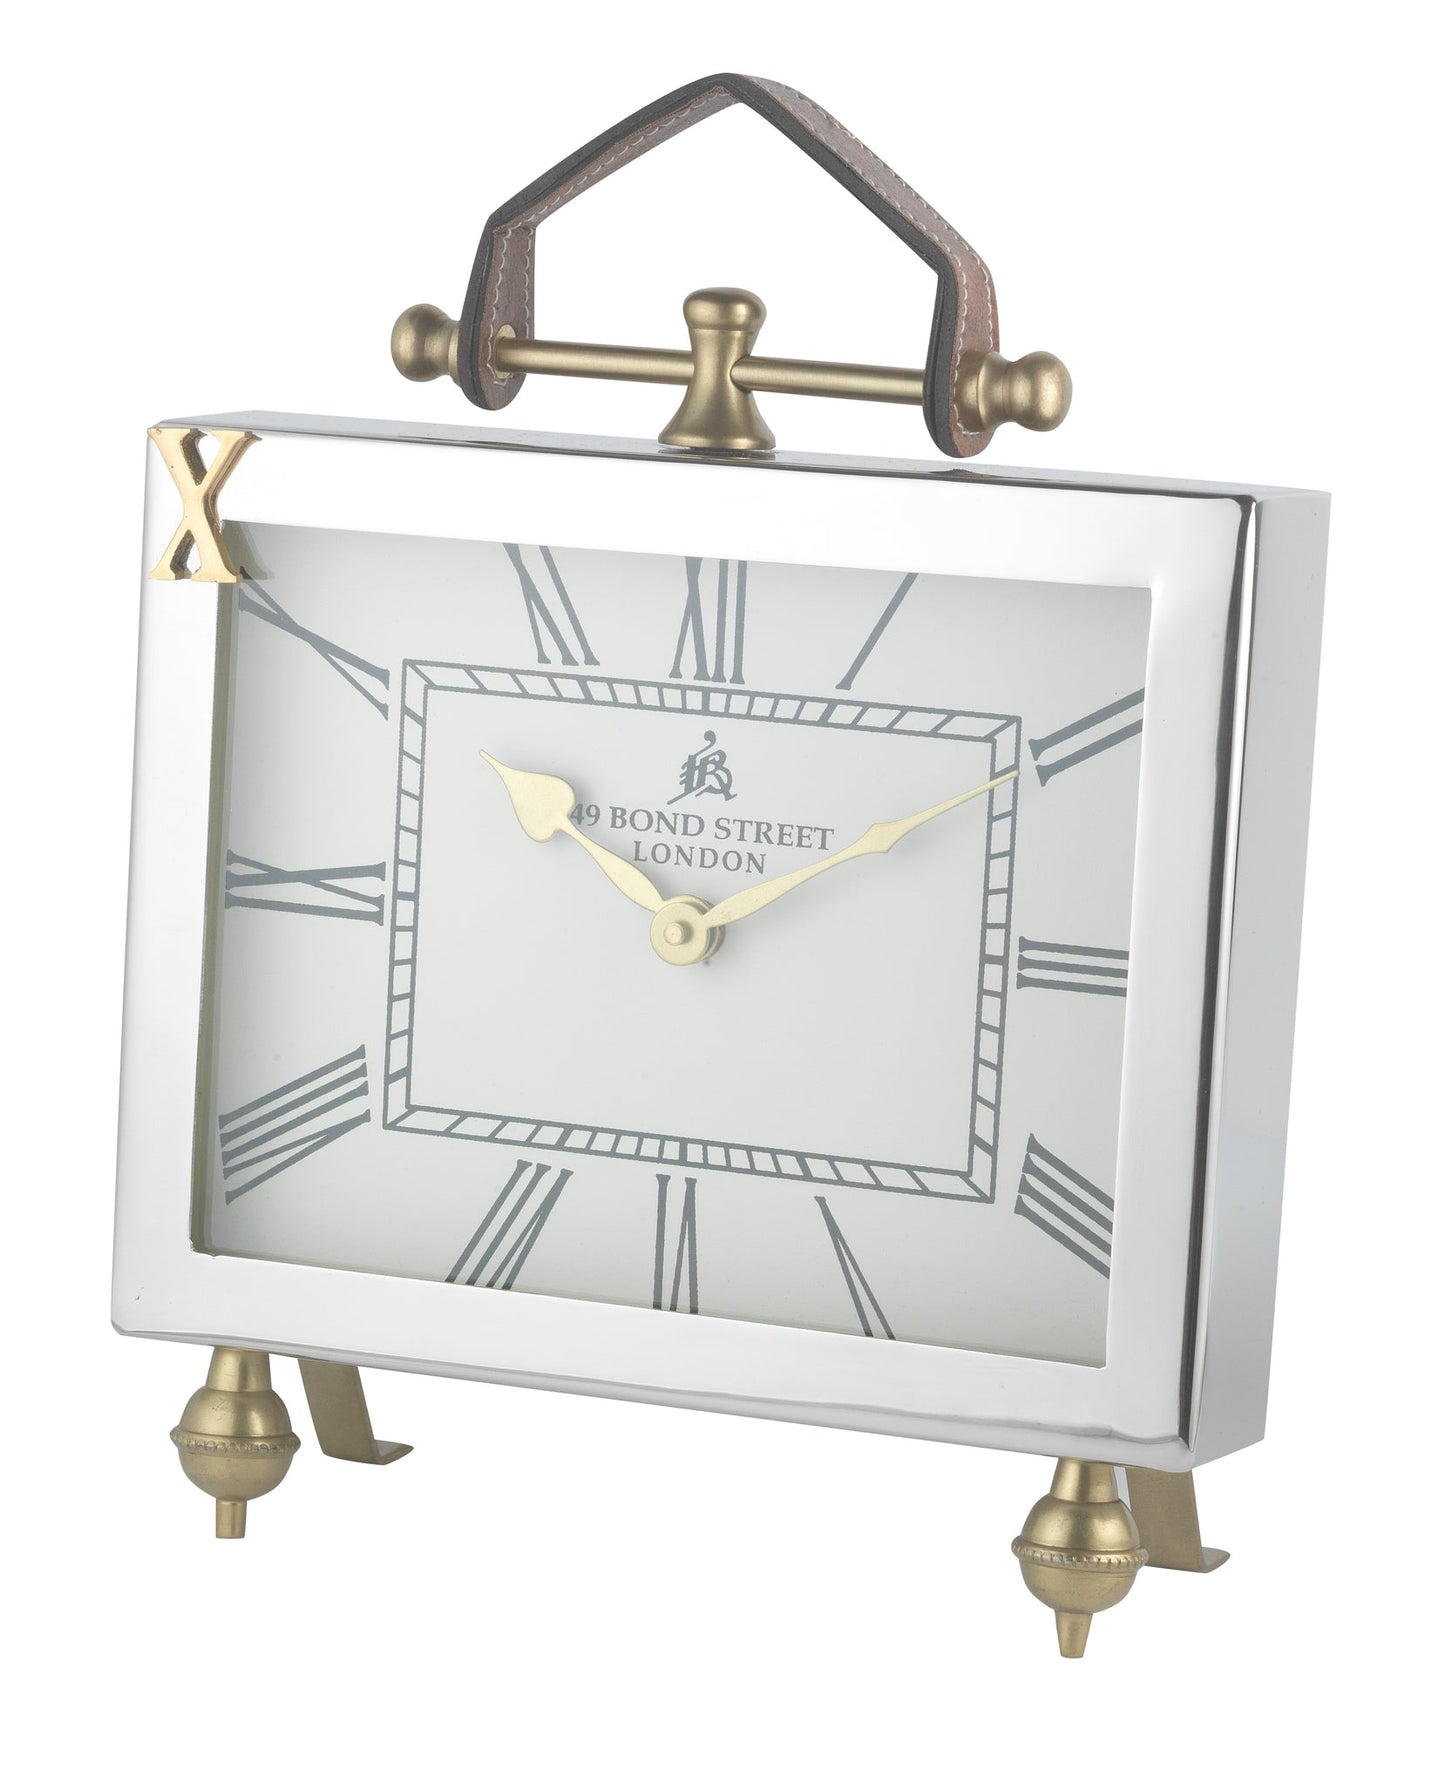 49 Bond Street London Vintage Alarm Clock